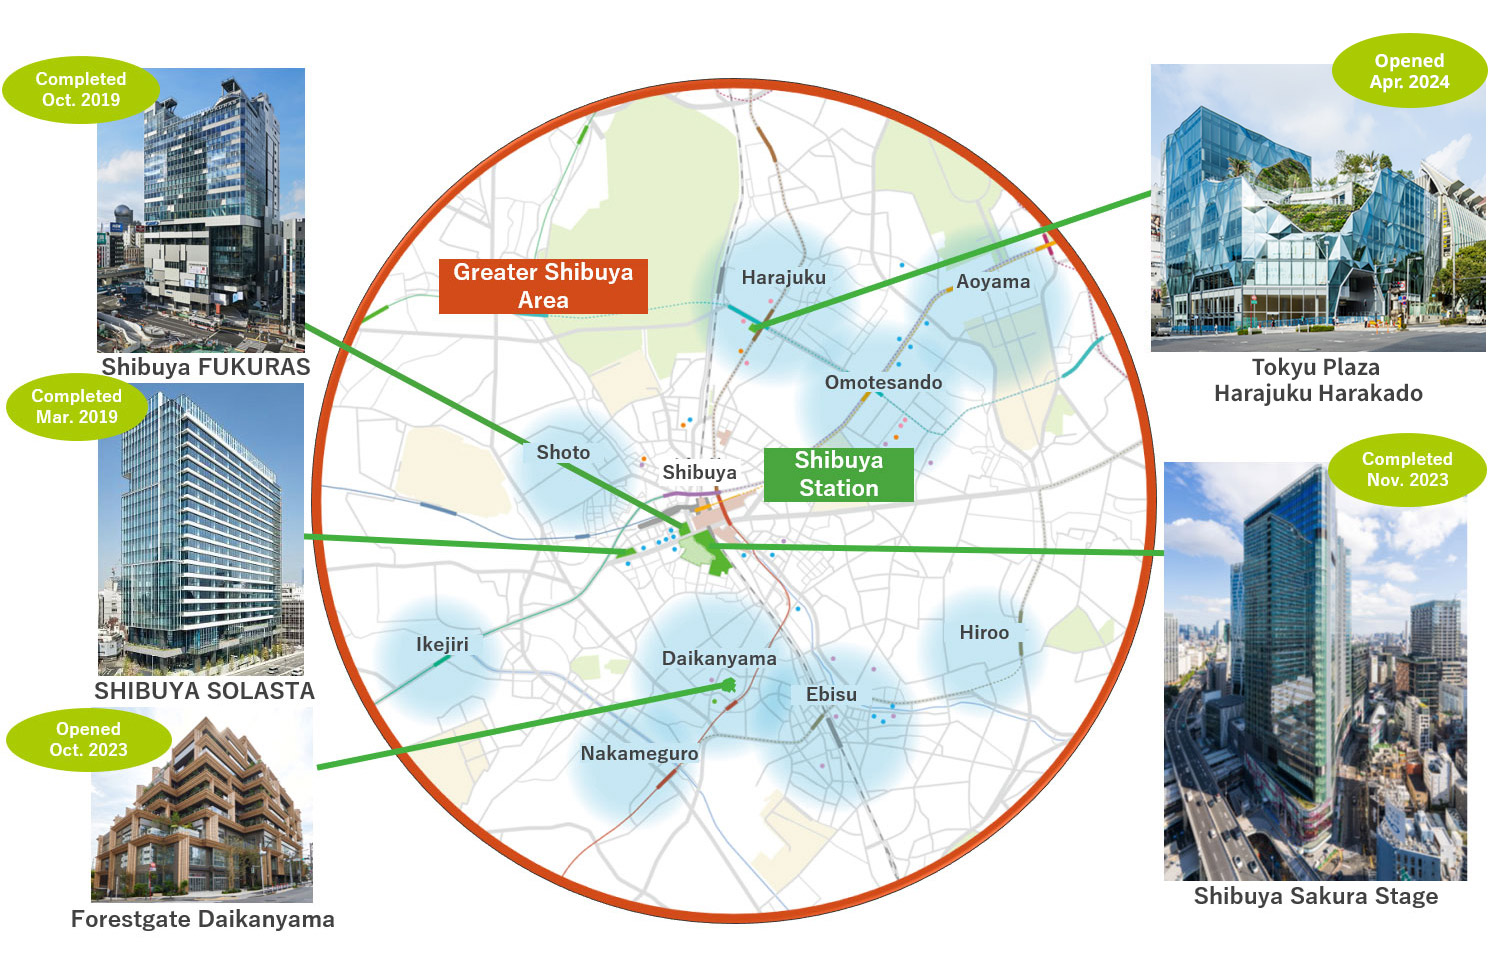 Urban Development Business: Development in the Greater Shibuya Area 